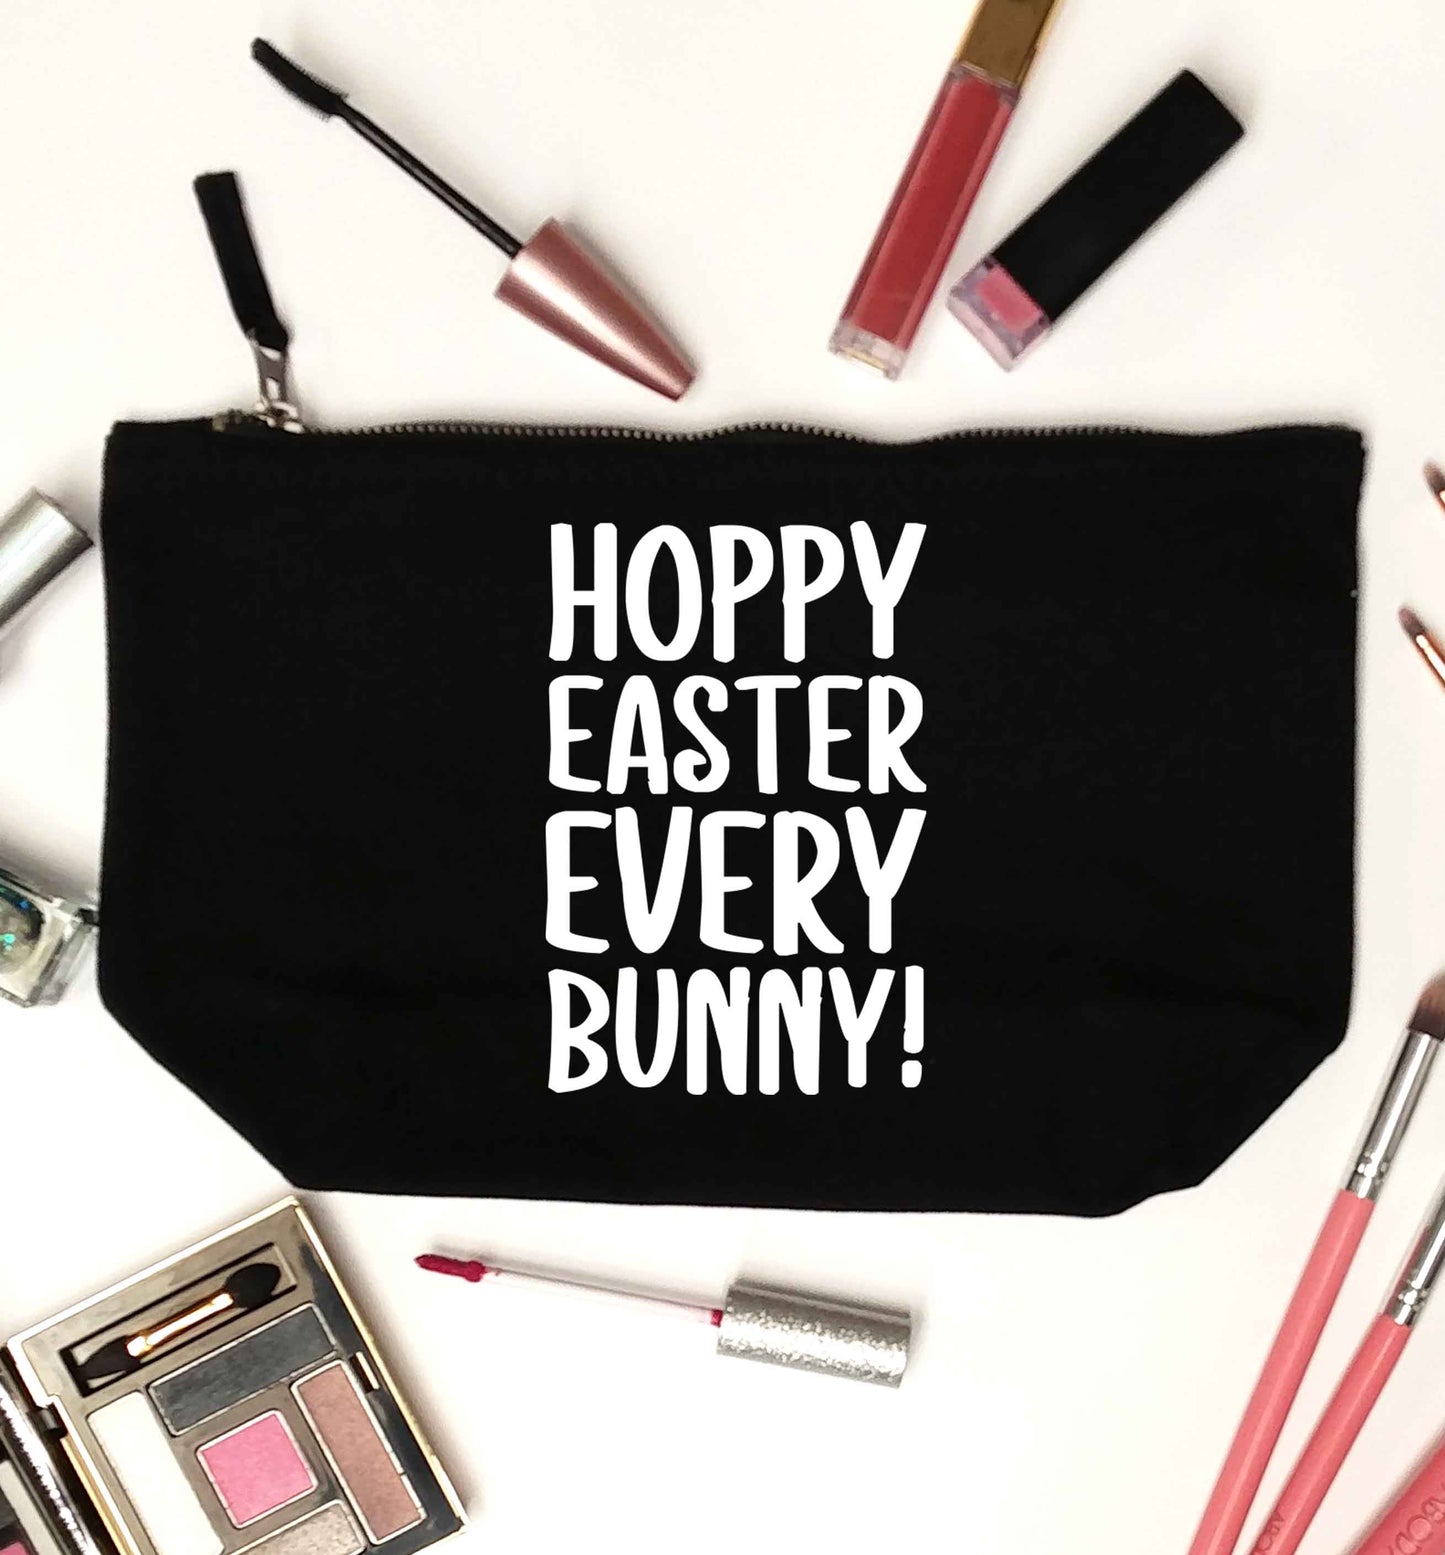 Hoppy Easter every bunny! black makeup bag